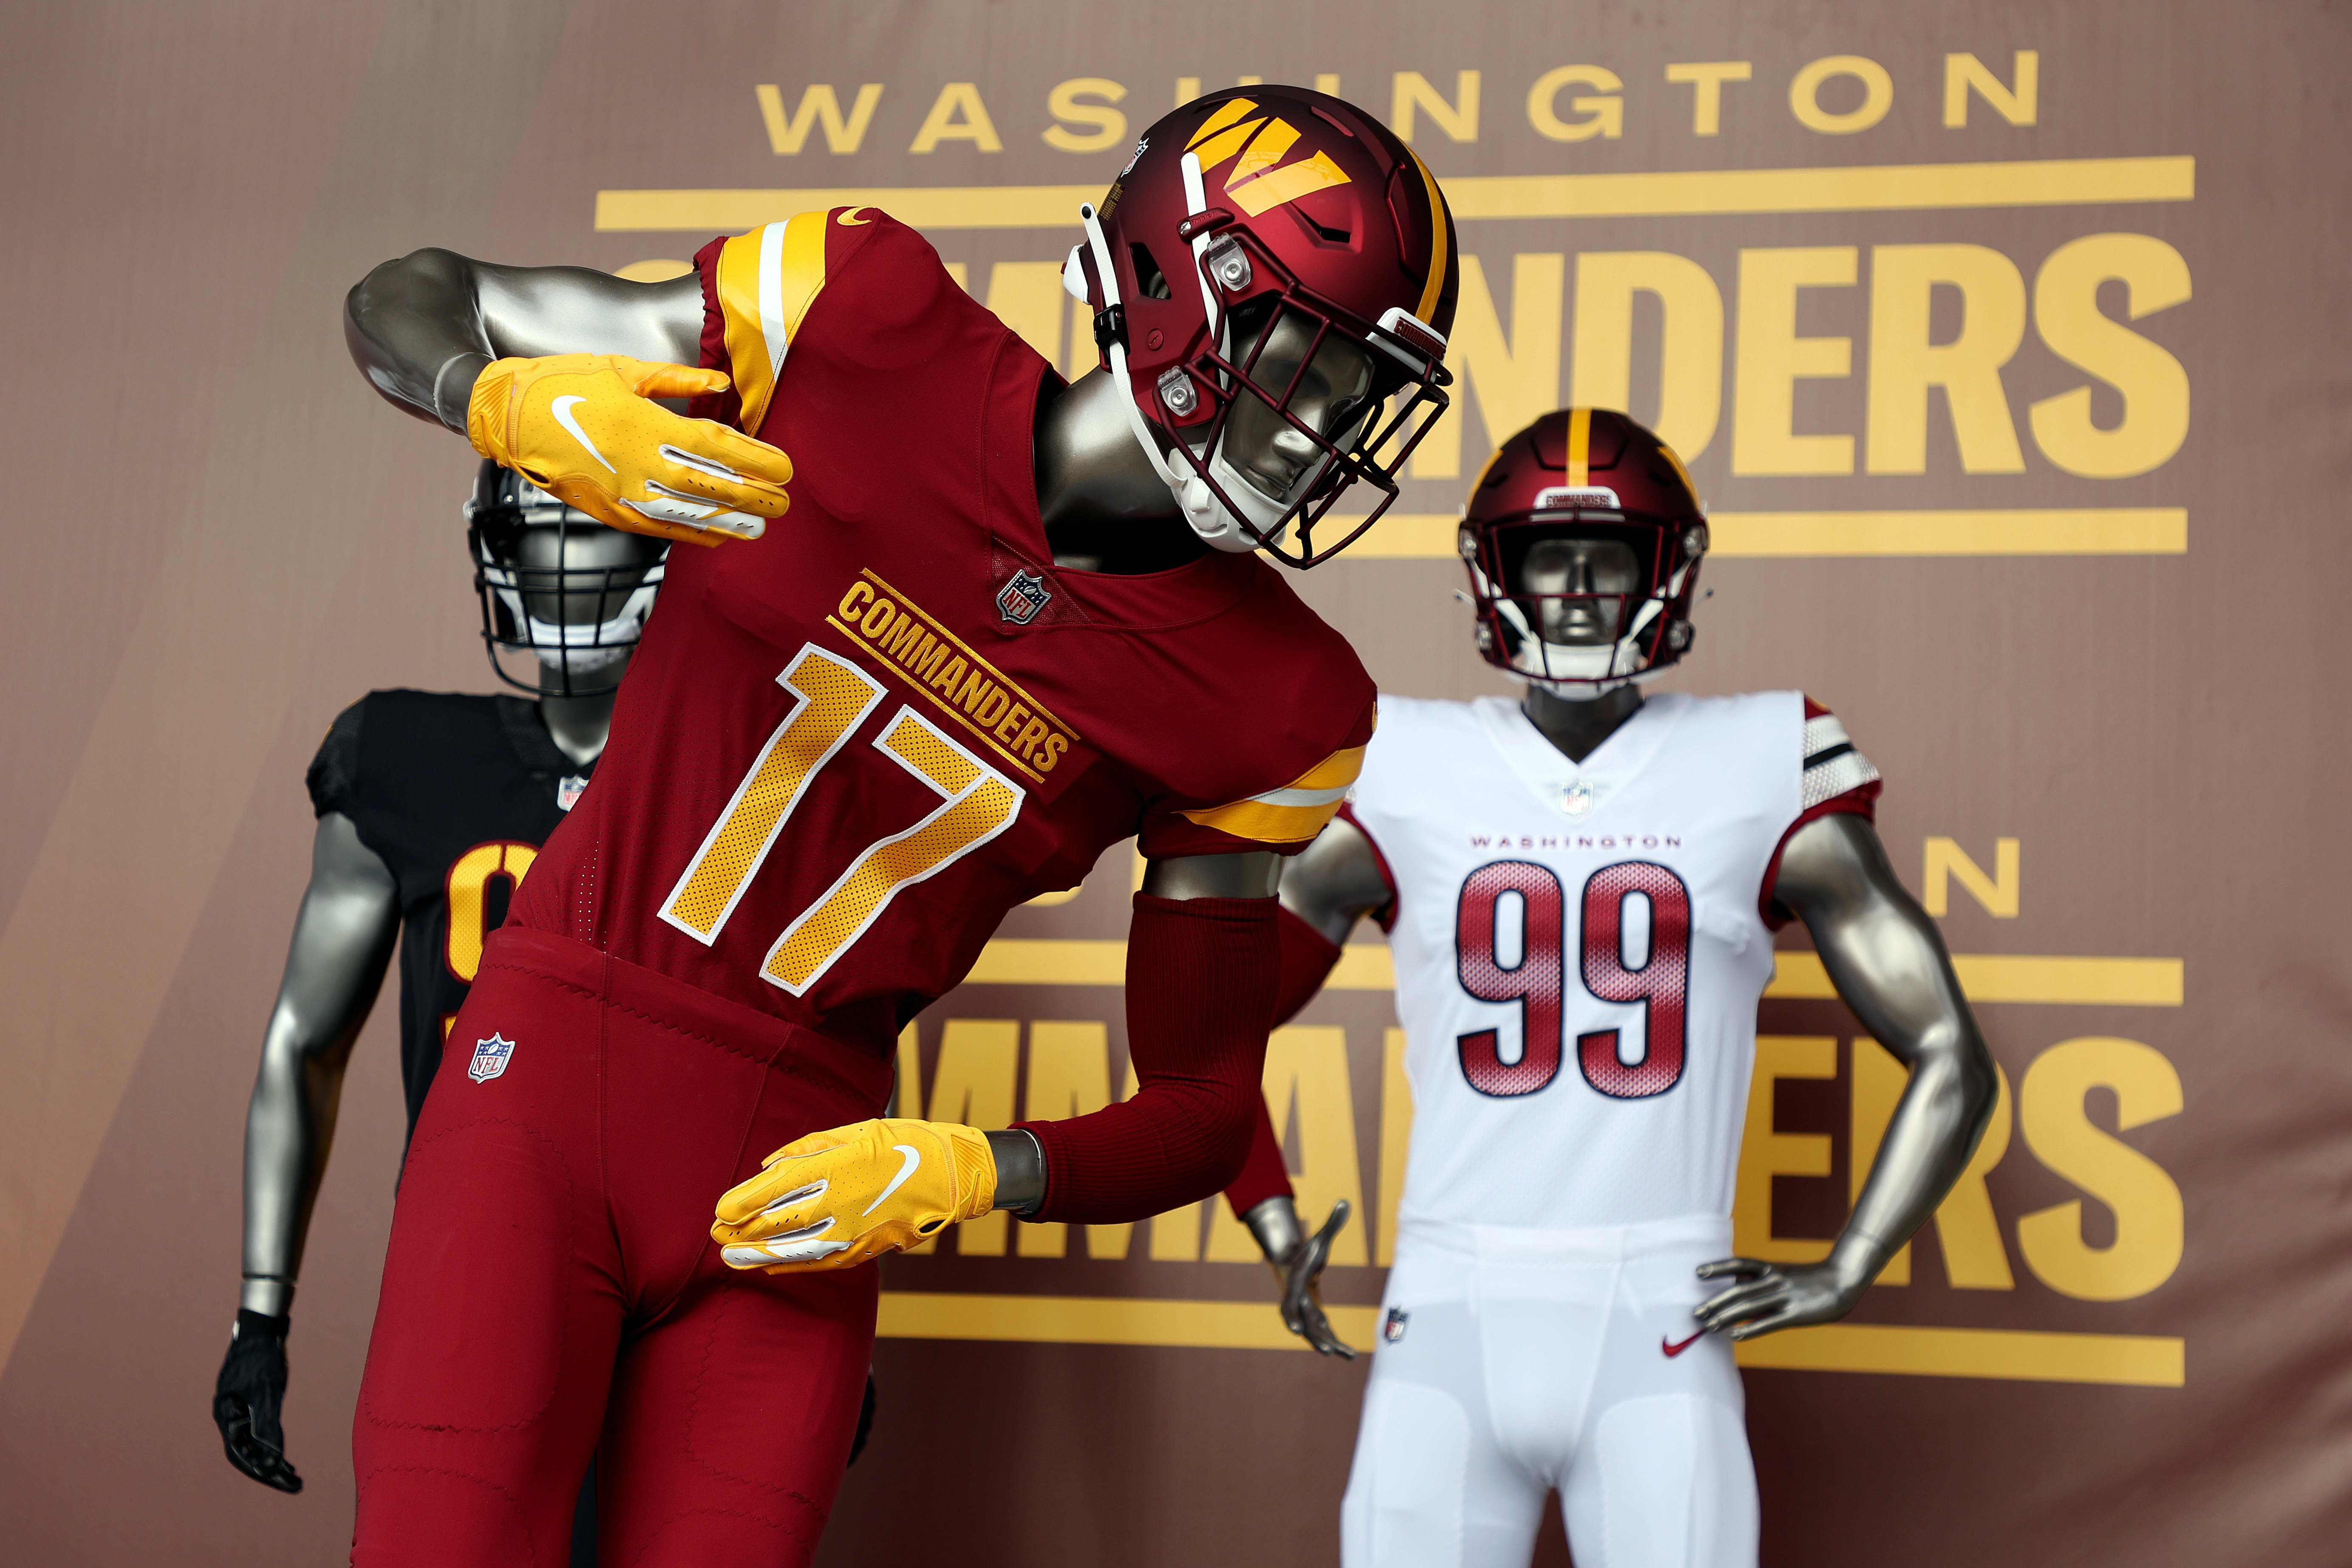 Washington Football Team officially renamed Washington Commanders